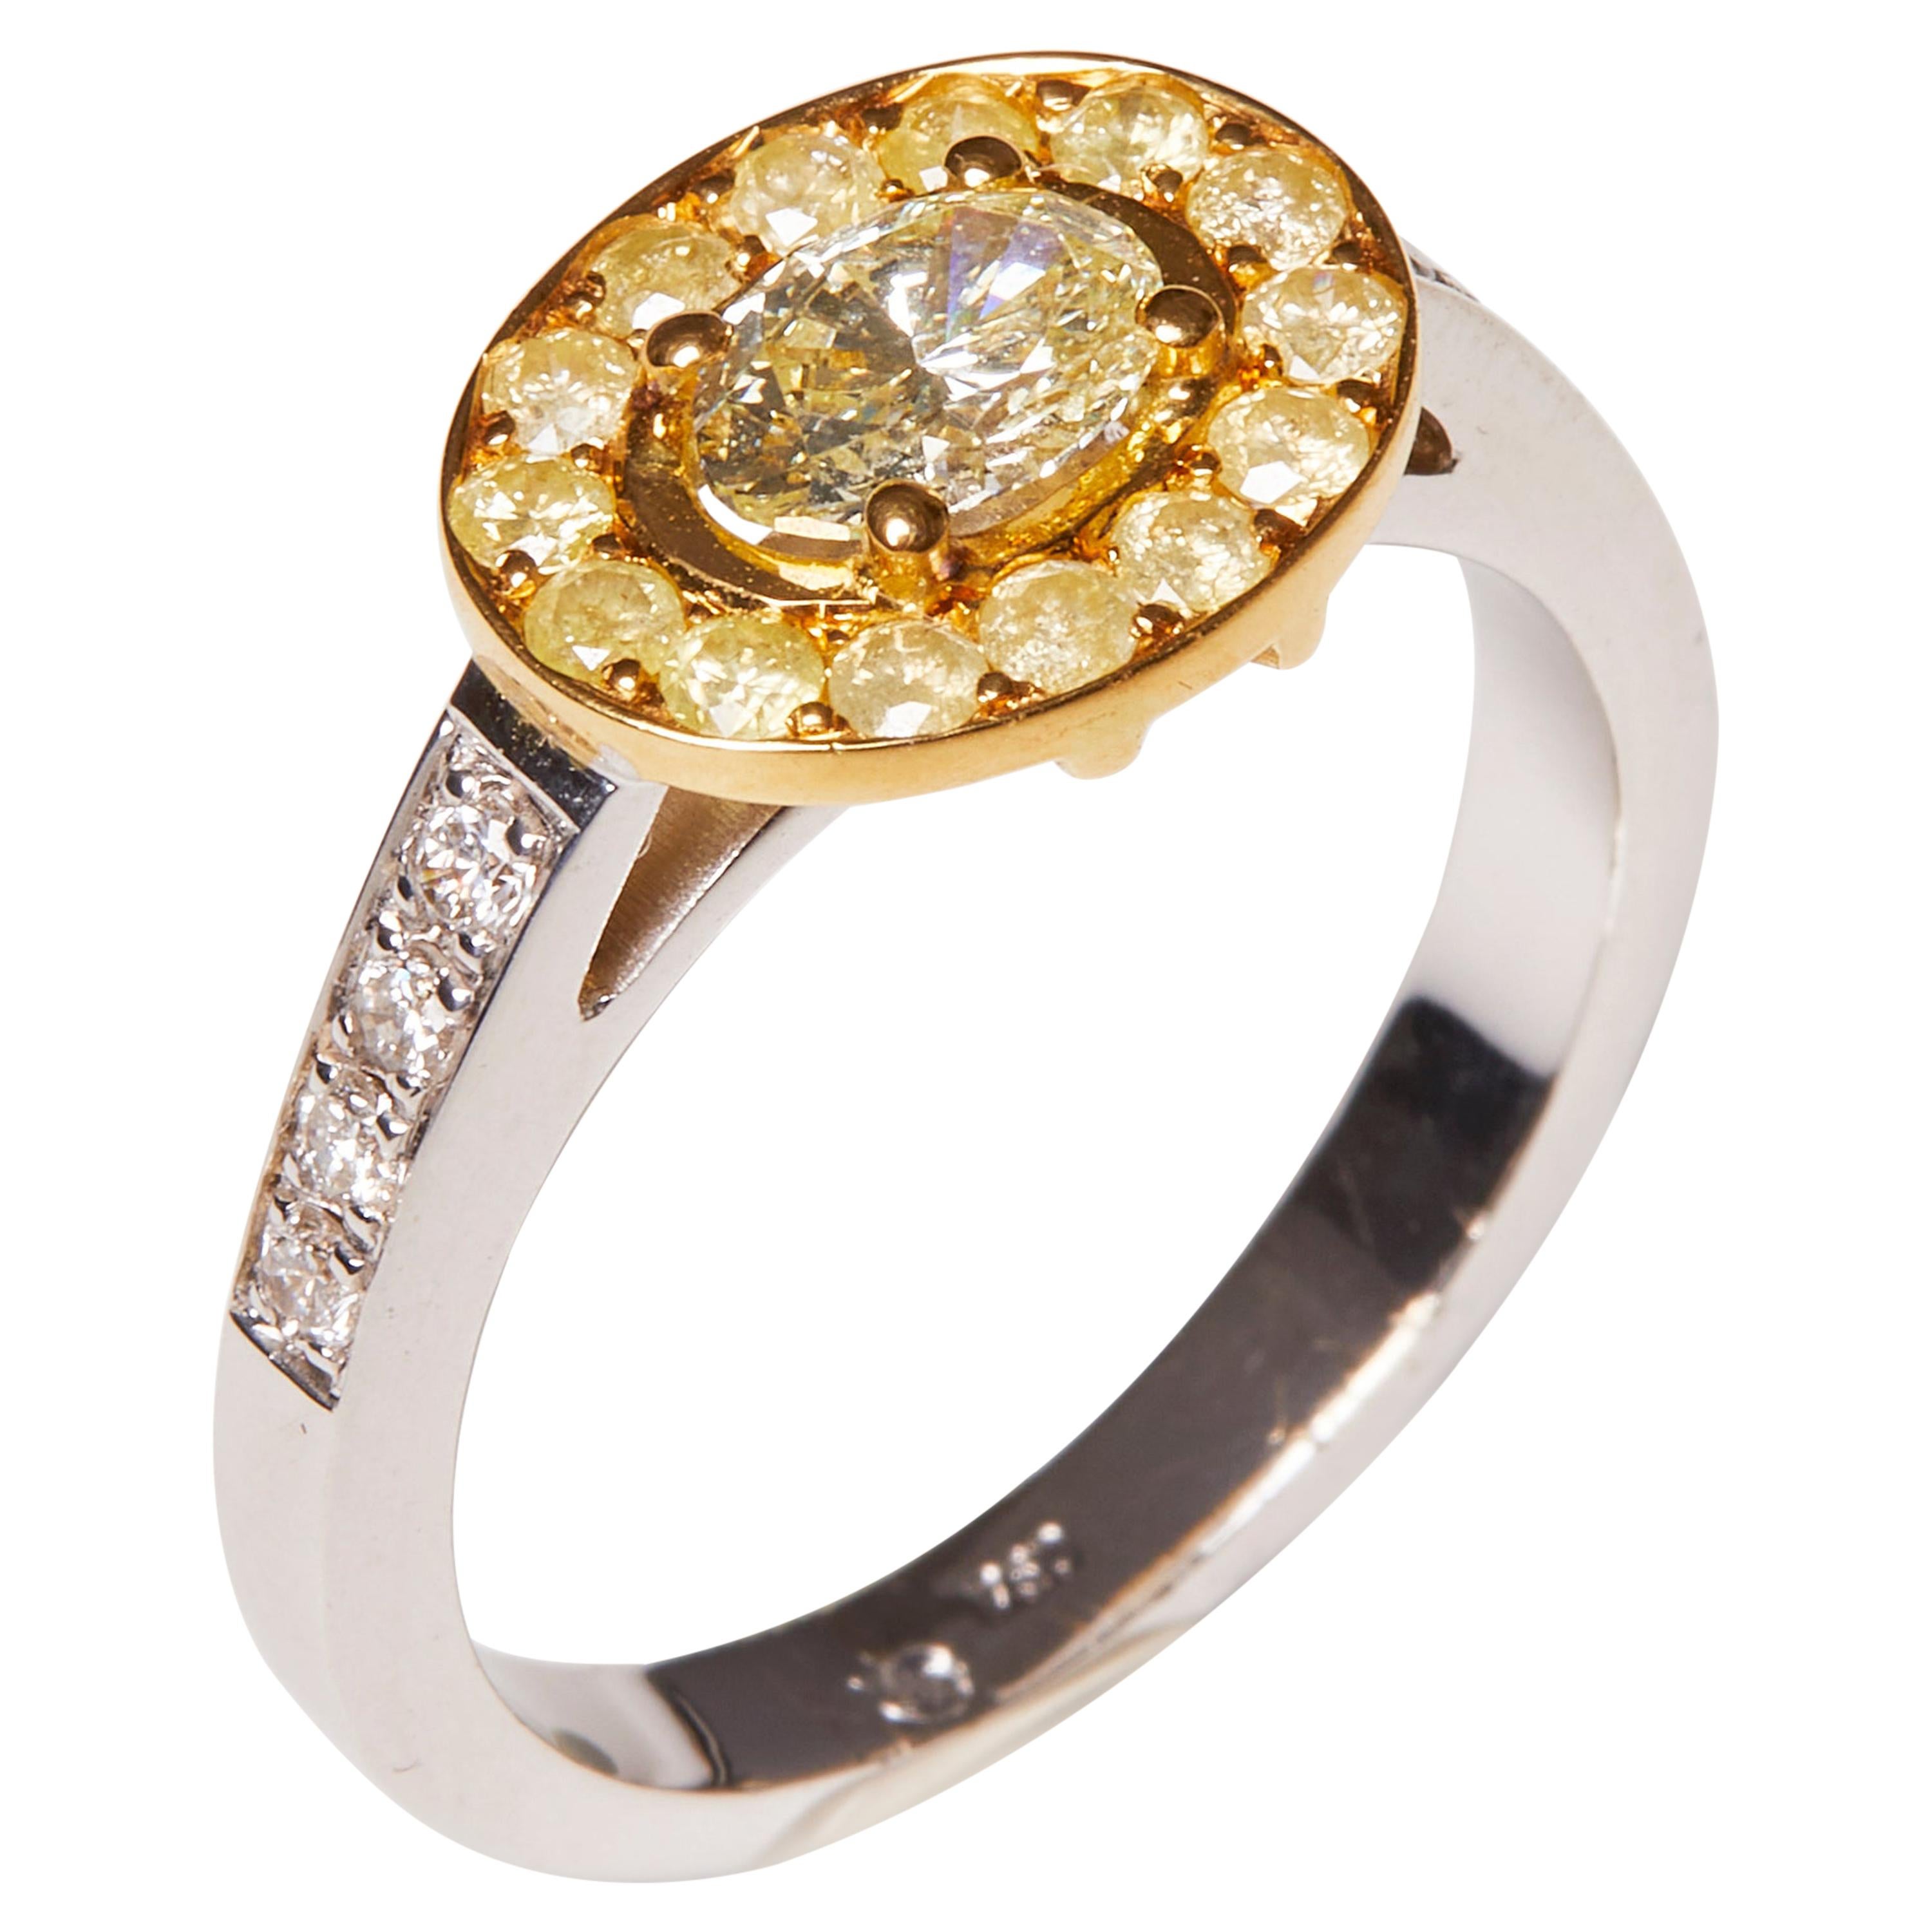 18 Karat White and Yellow Gold Diamond Cocktail Ring